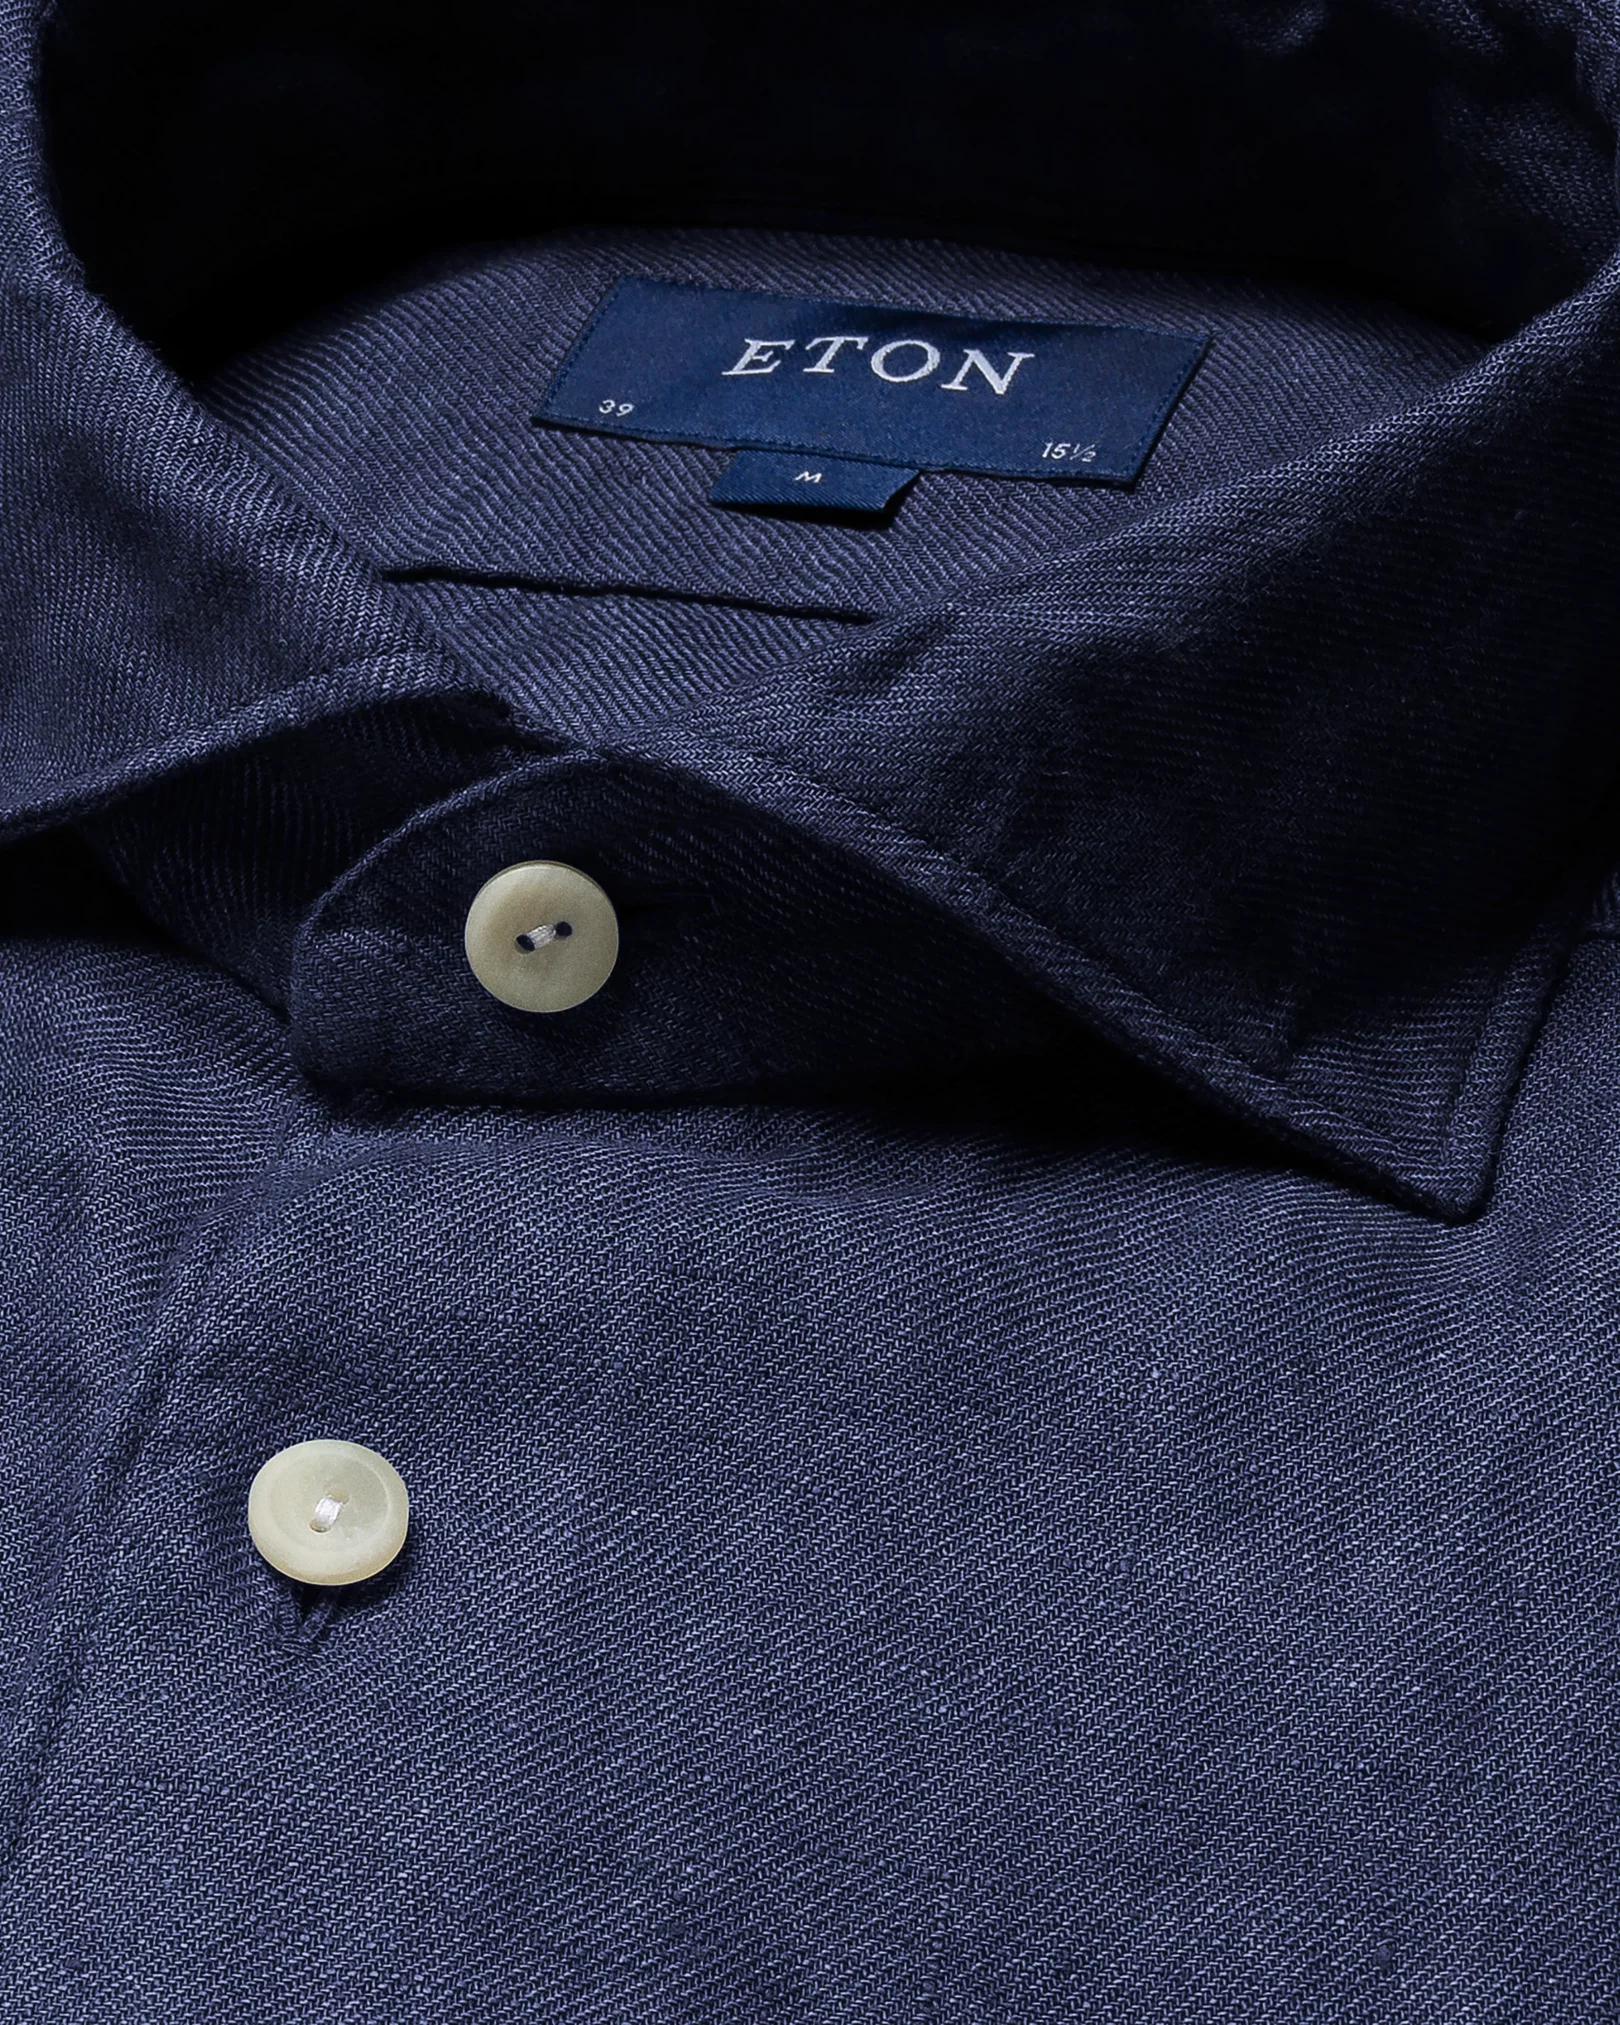 Eton - navy blue linen